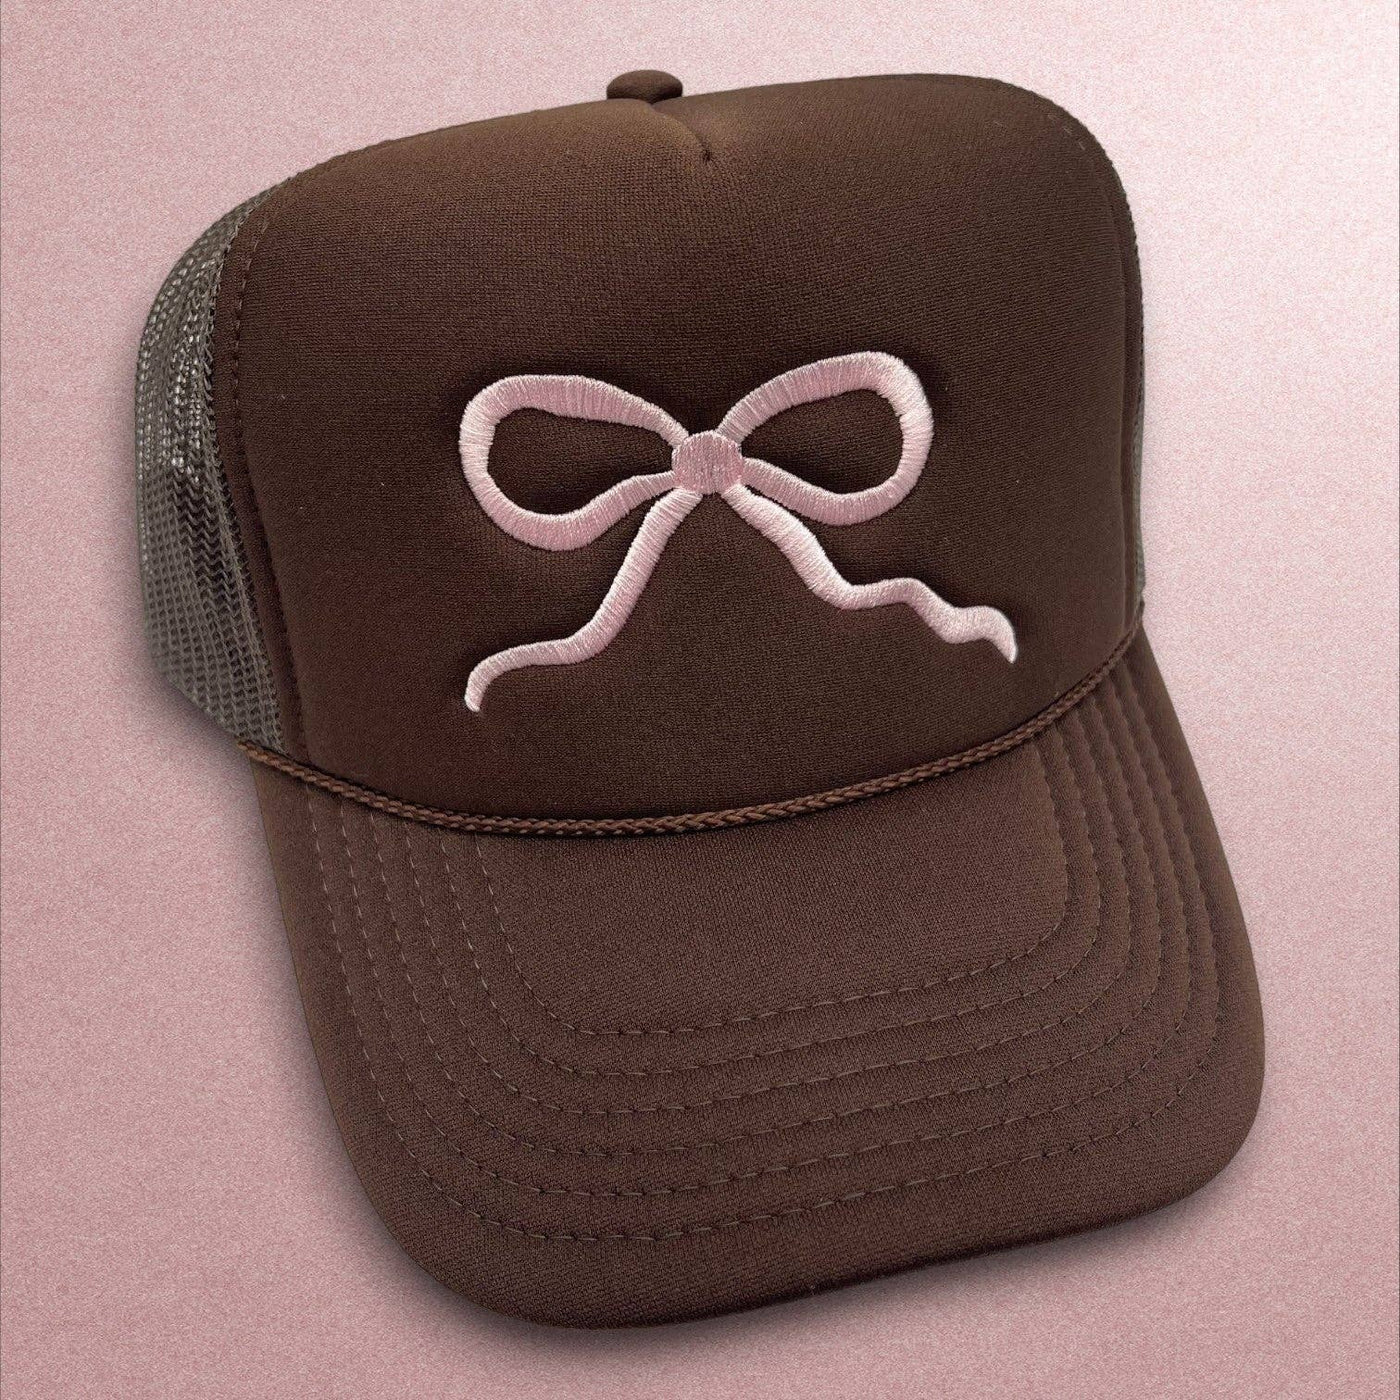 Pink Bow Brown Trucker Hat